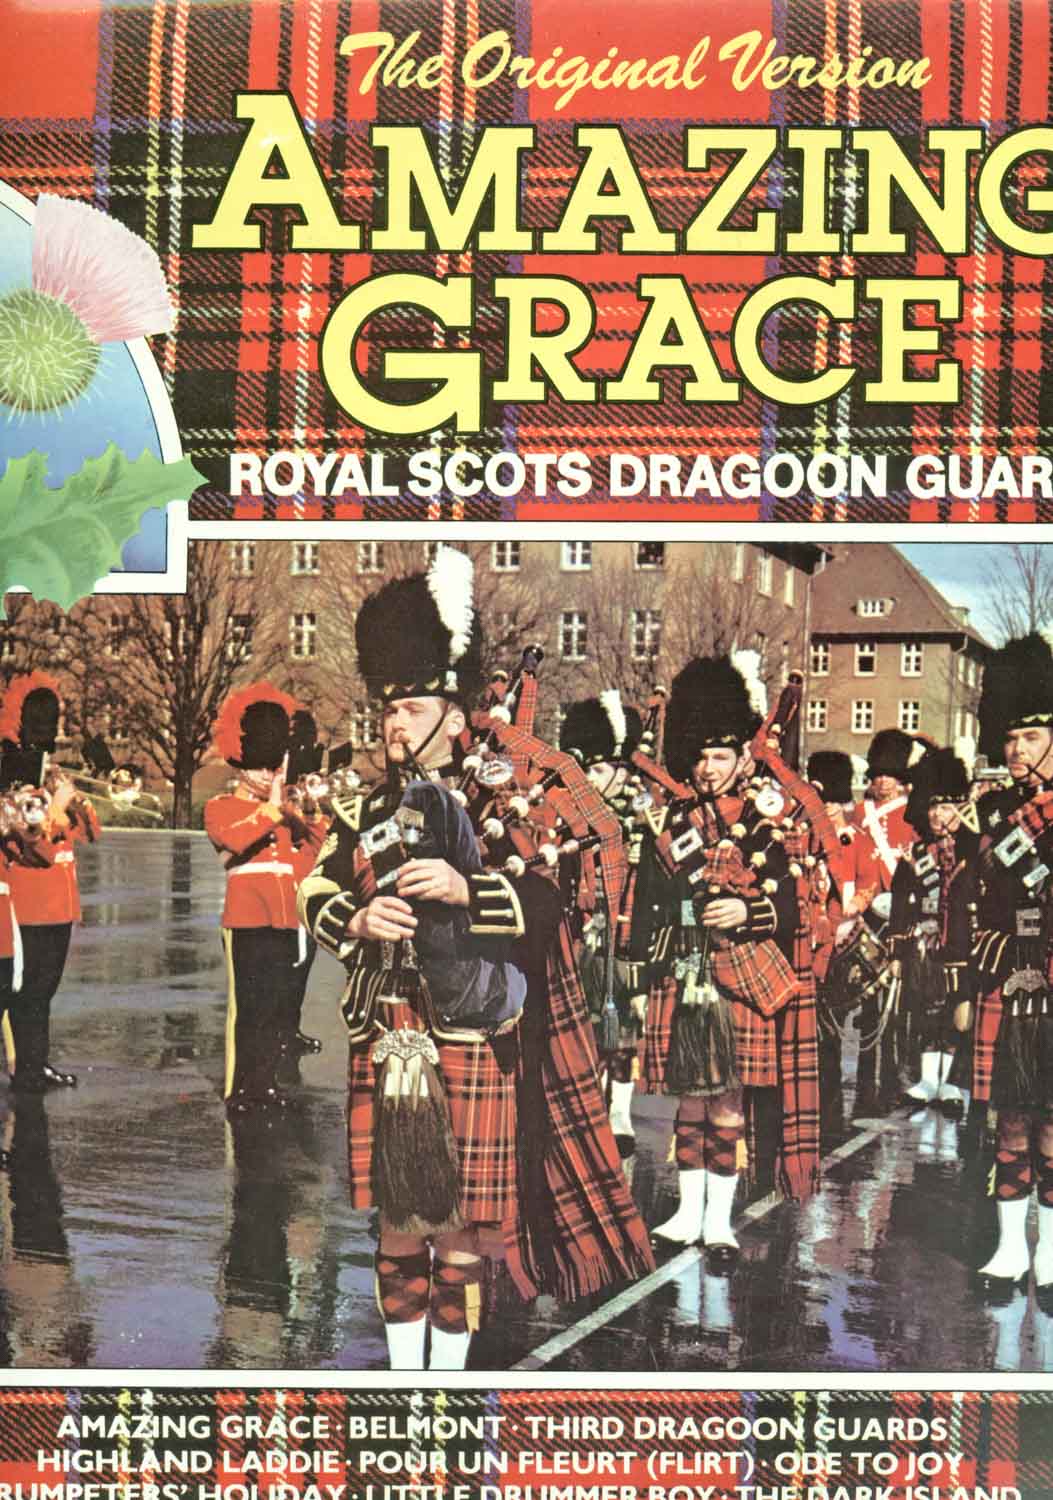 Royal Scots Dragoon Guards  The Original Version of Amazing Grace (CDS 1157)  *LP 12'' (Vinyl)*. 